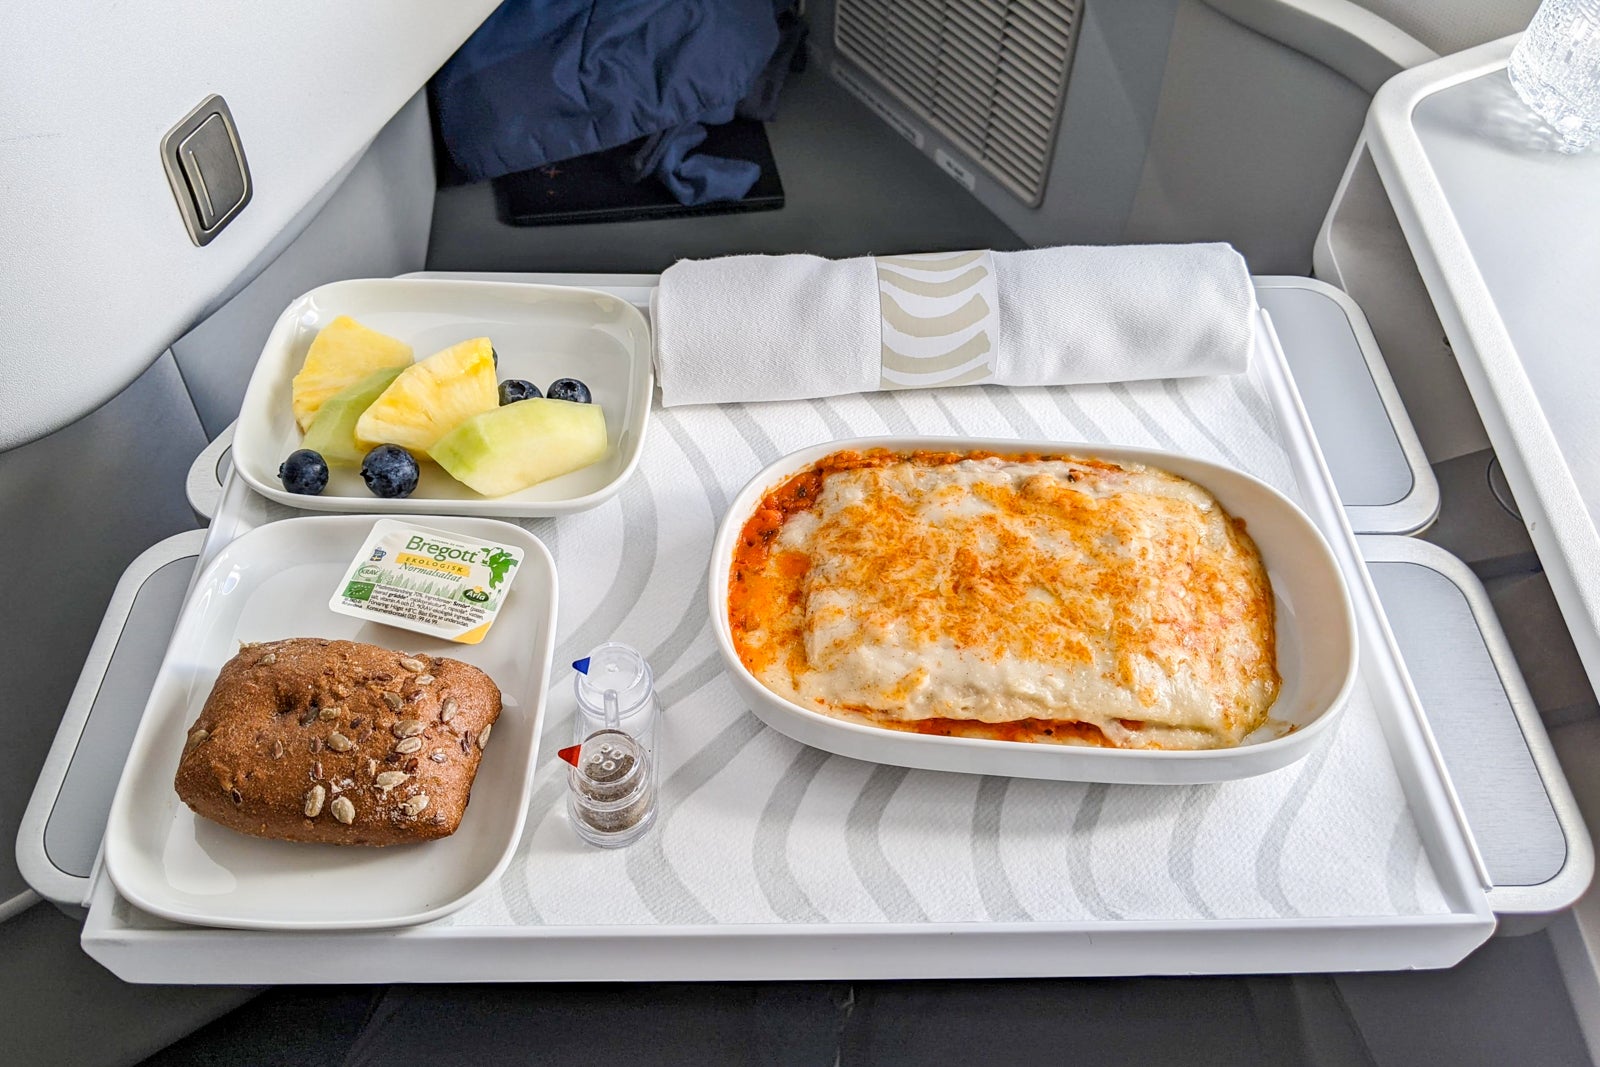 Arrival meal in Finnair business class